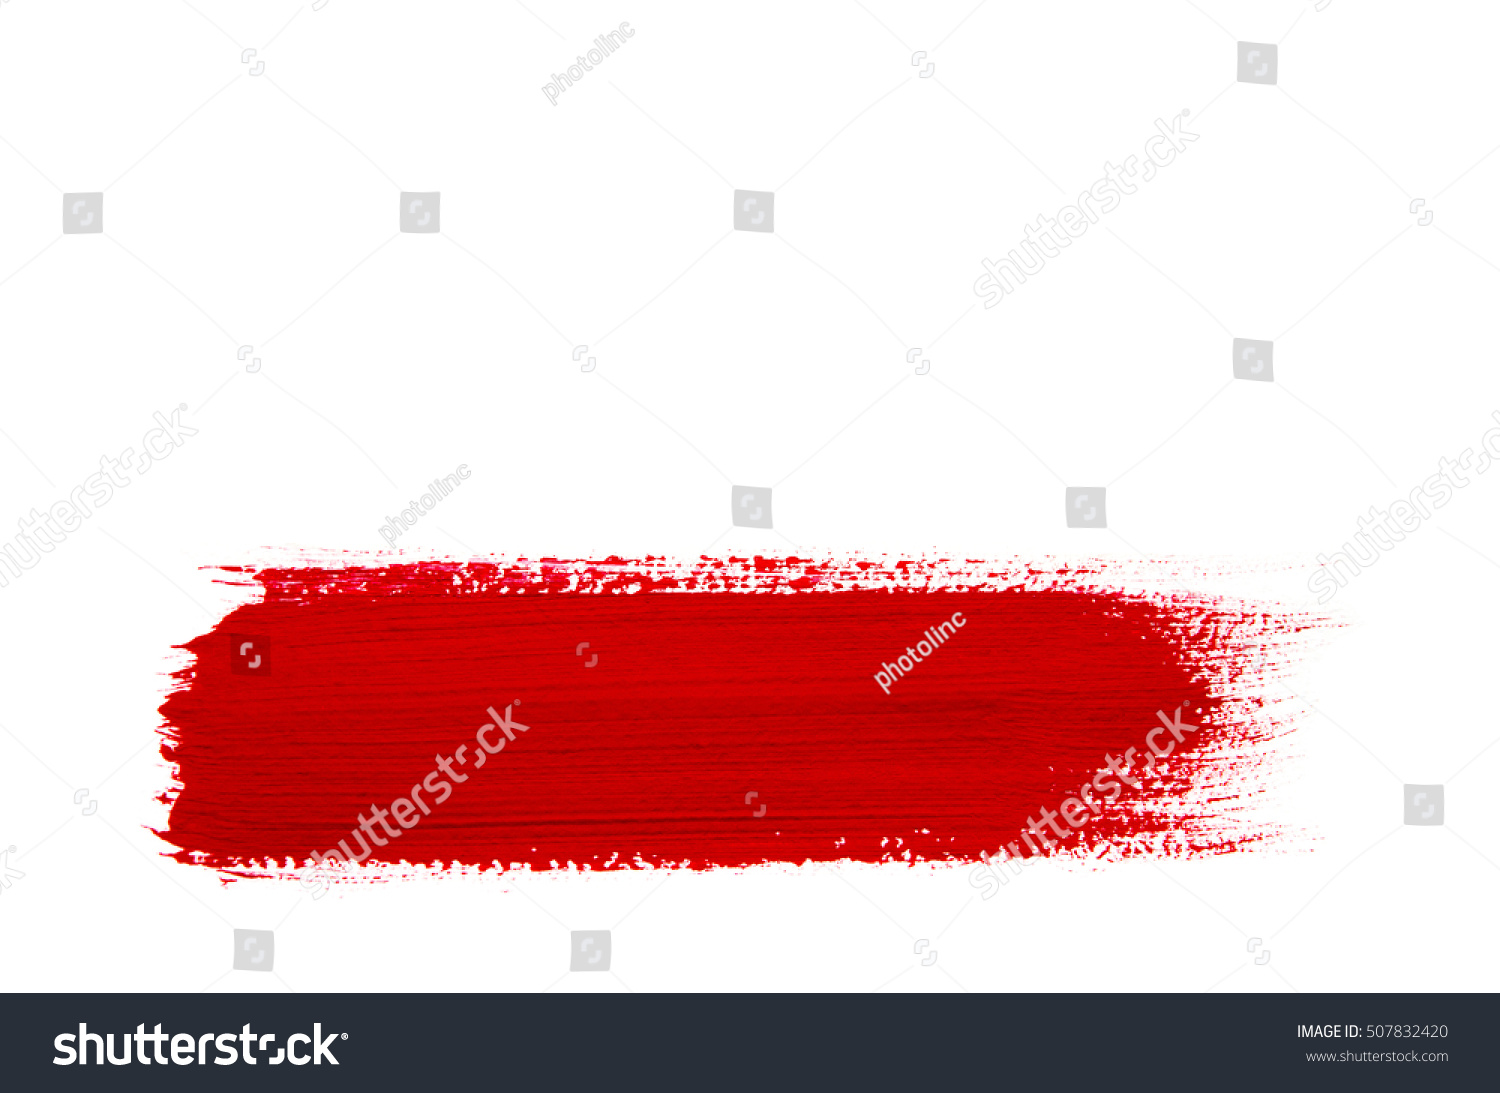 Red brush stroke isolated on grunge background #507832420